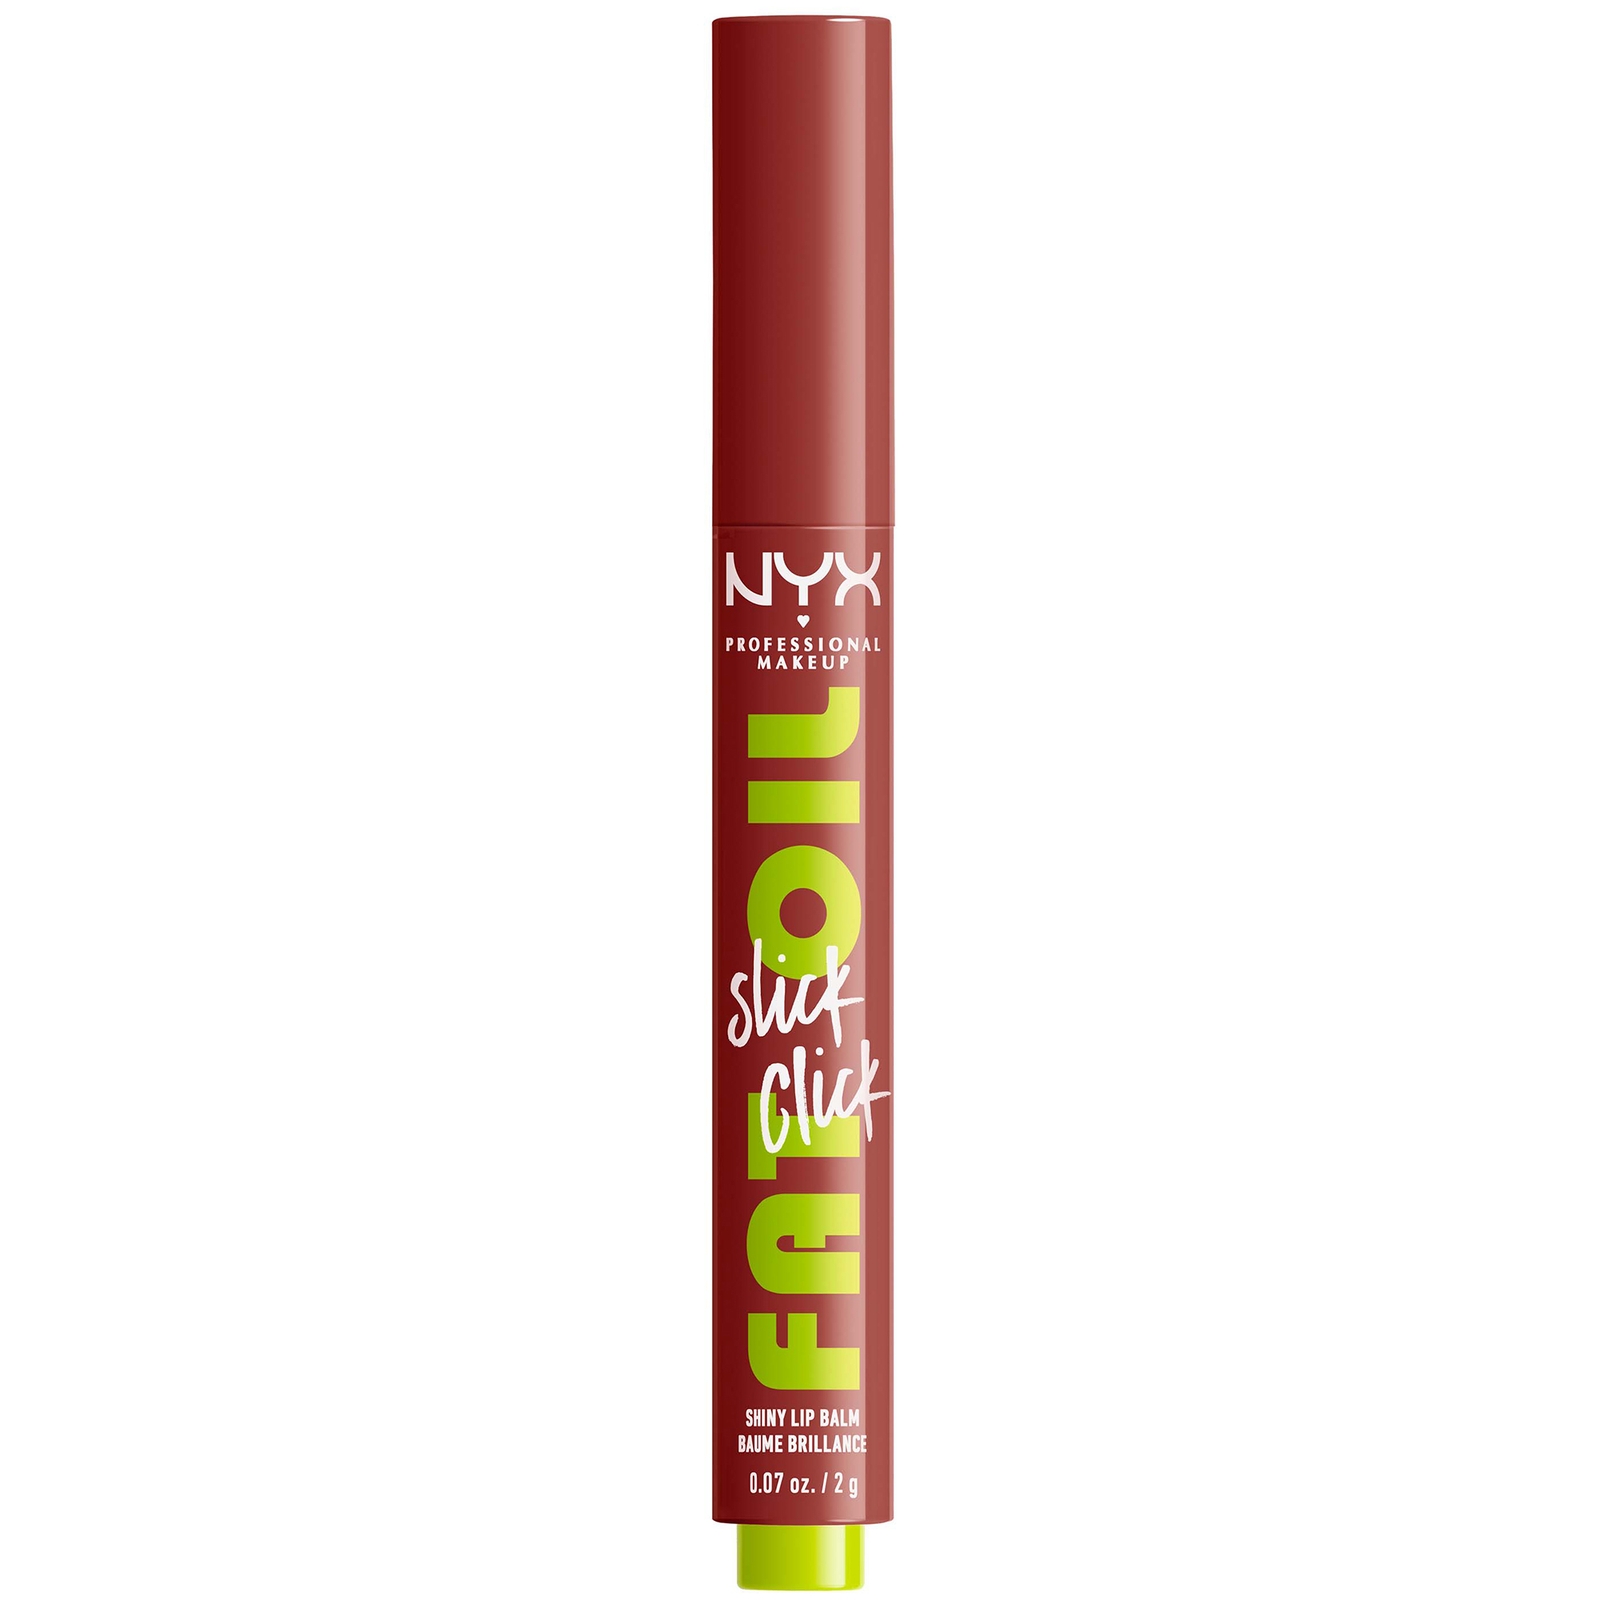 Nyx Professional Makeup Fat Oil Slick Click Lip Balm 2ml (various Shades) - Going Viral